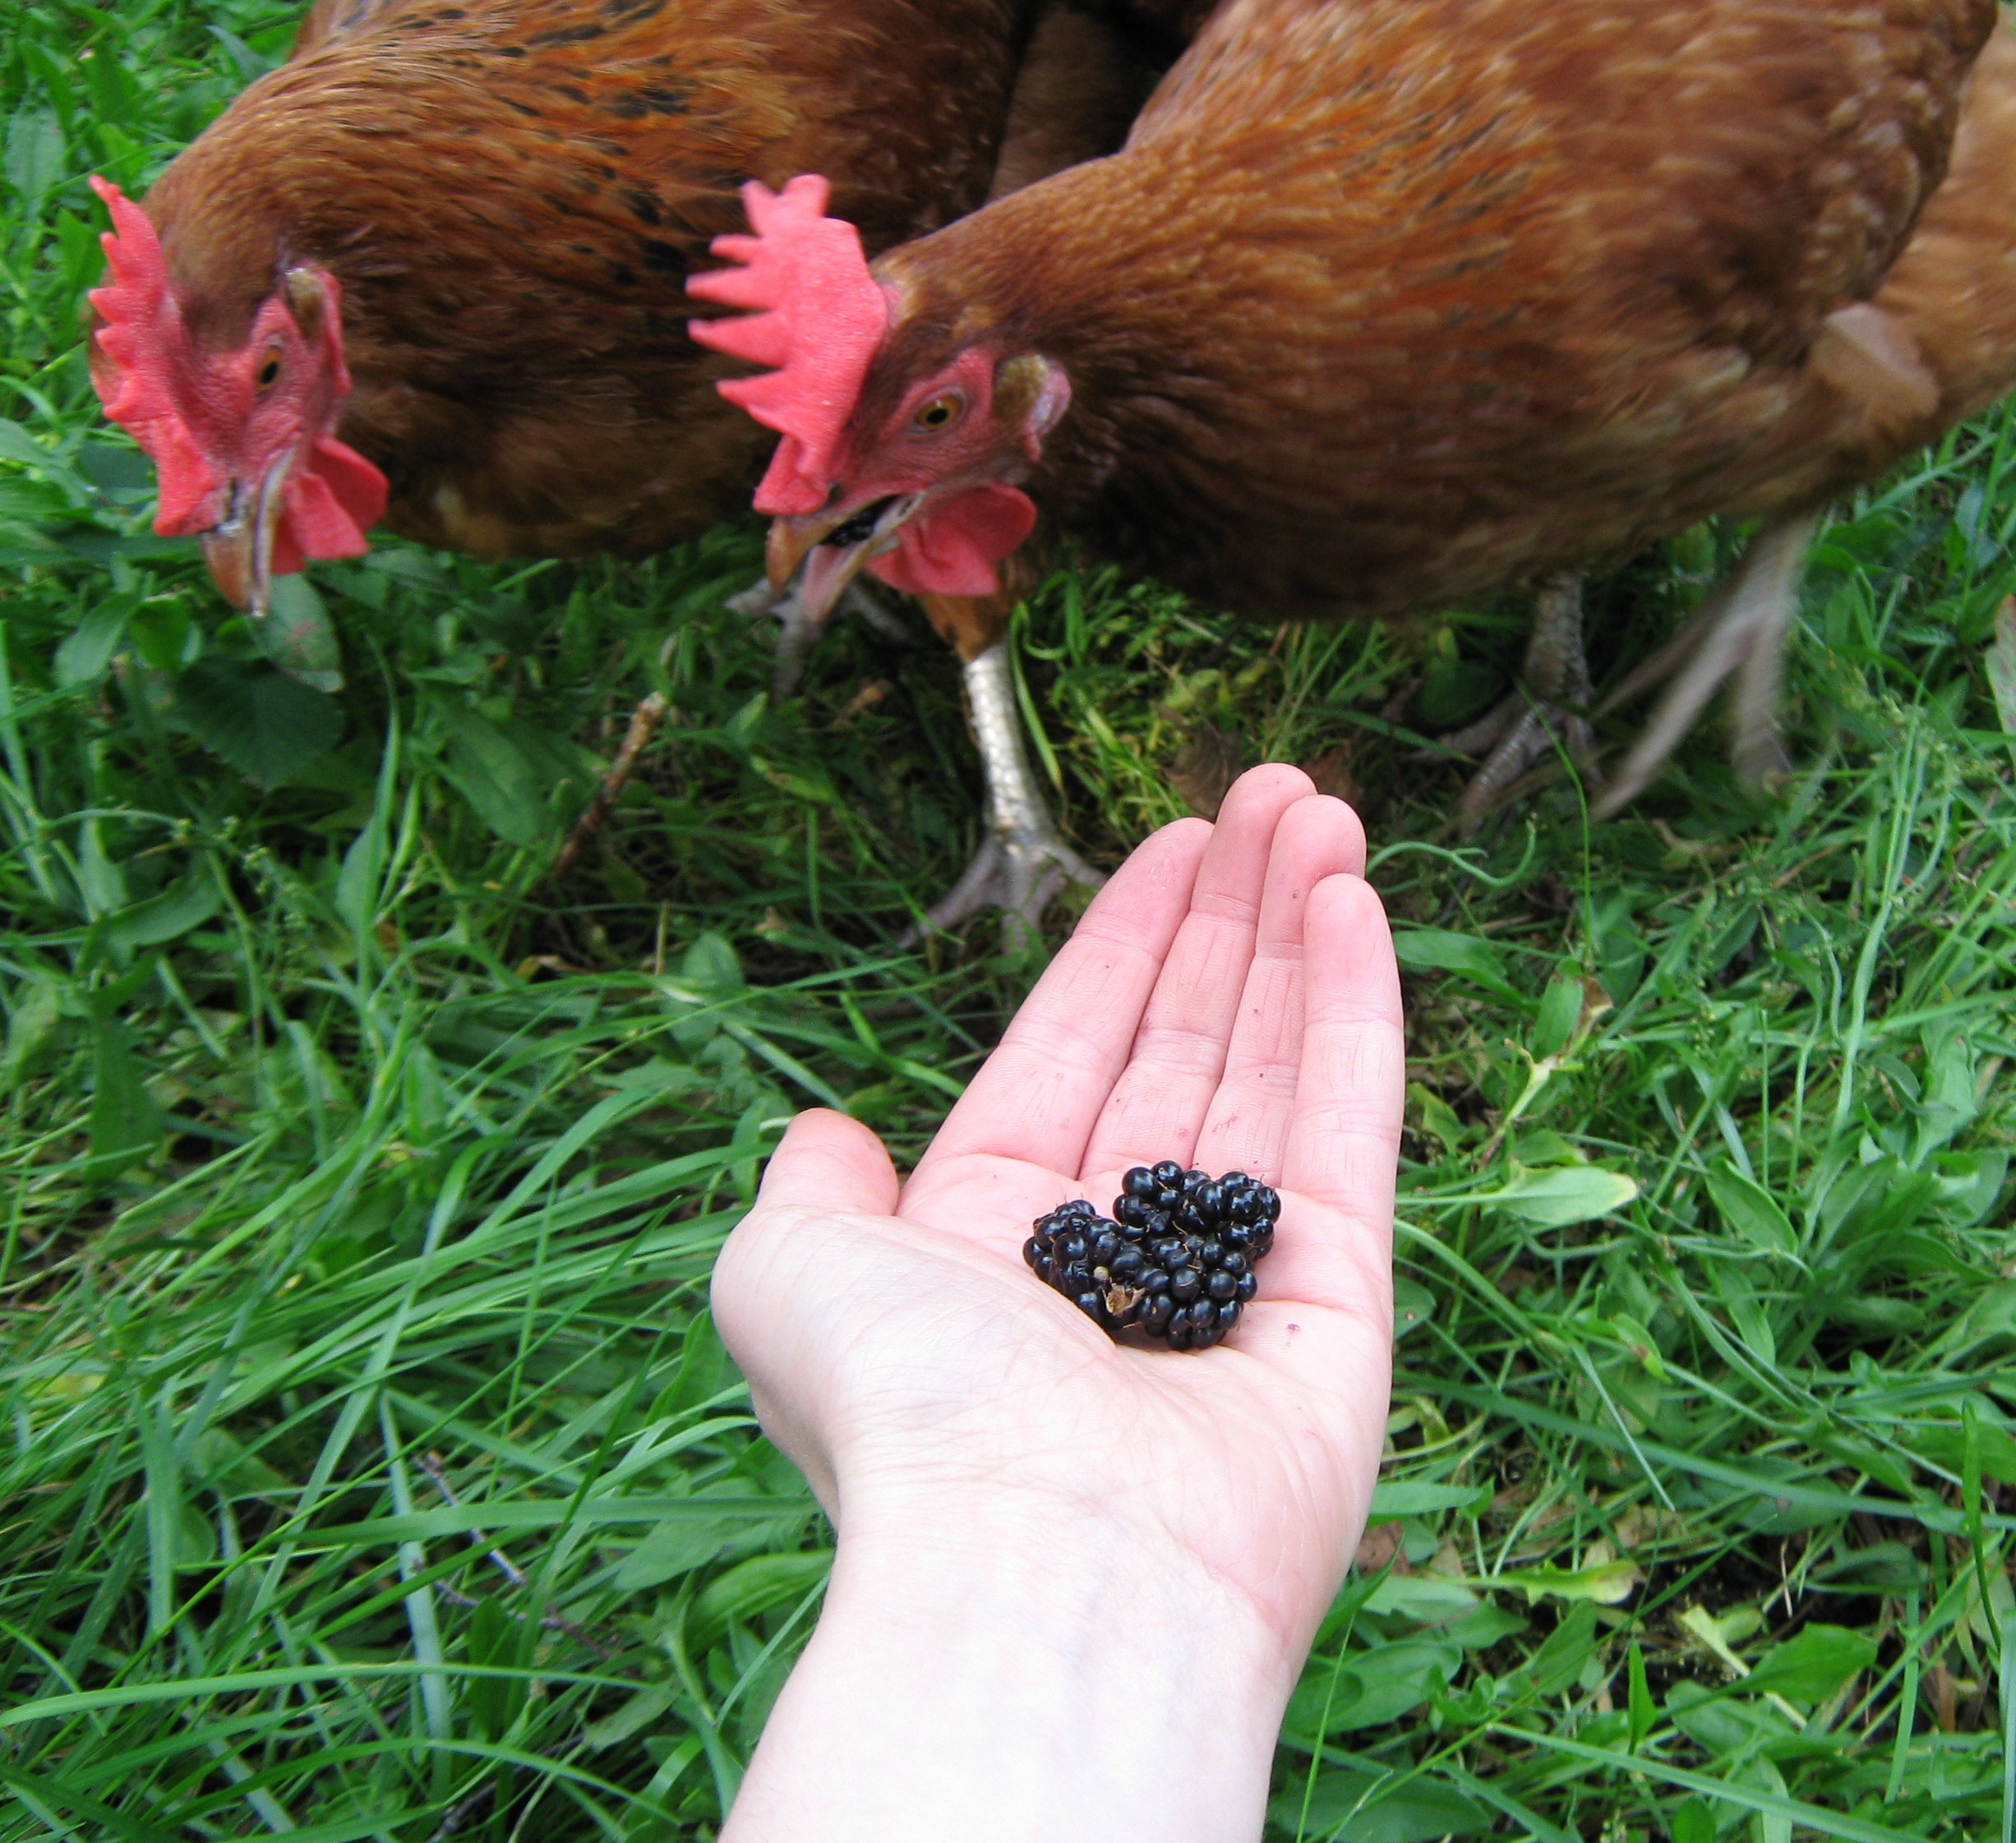 Jessica Umpleby's chickens love feeding on the fallen fruit in the garden